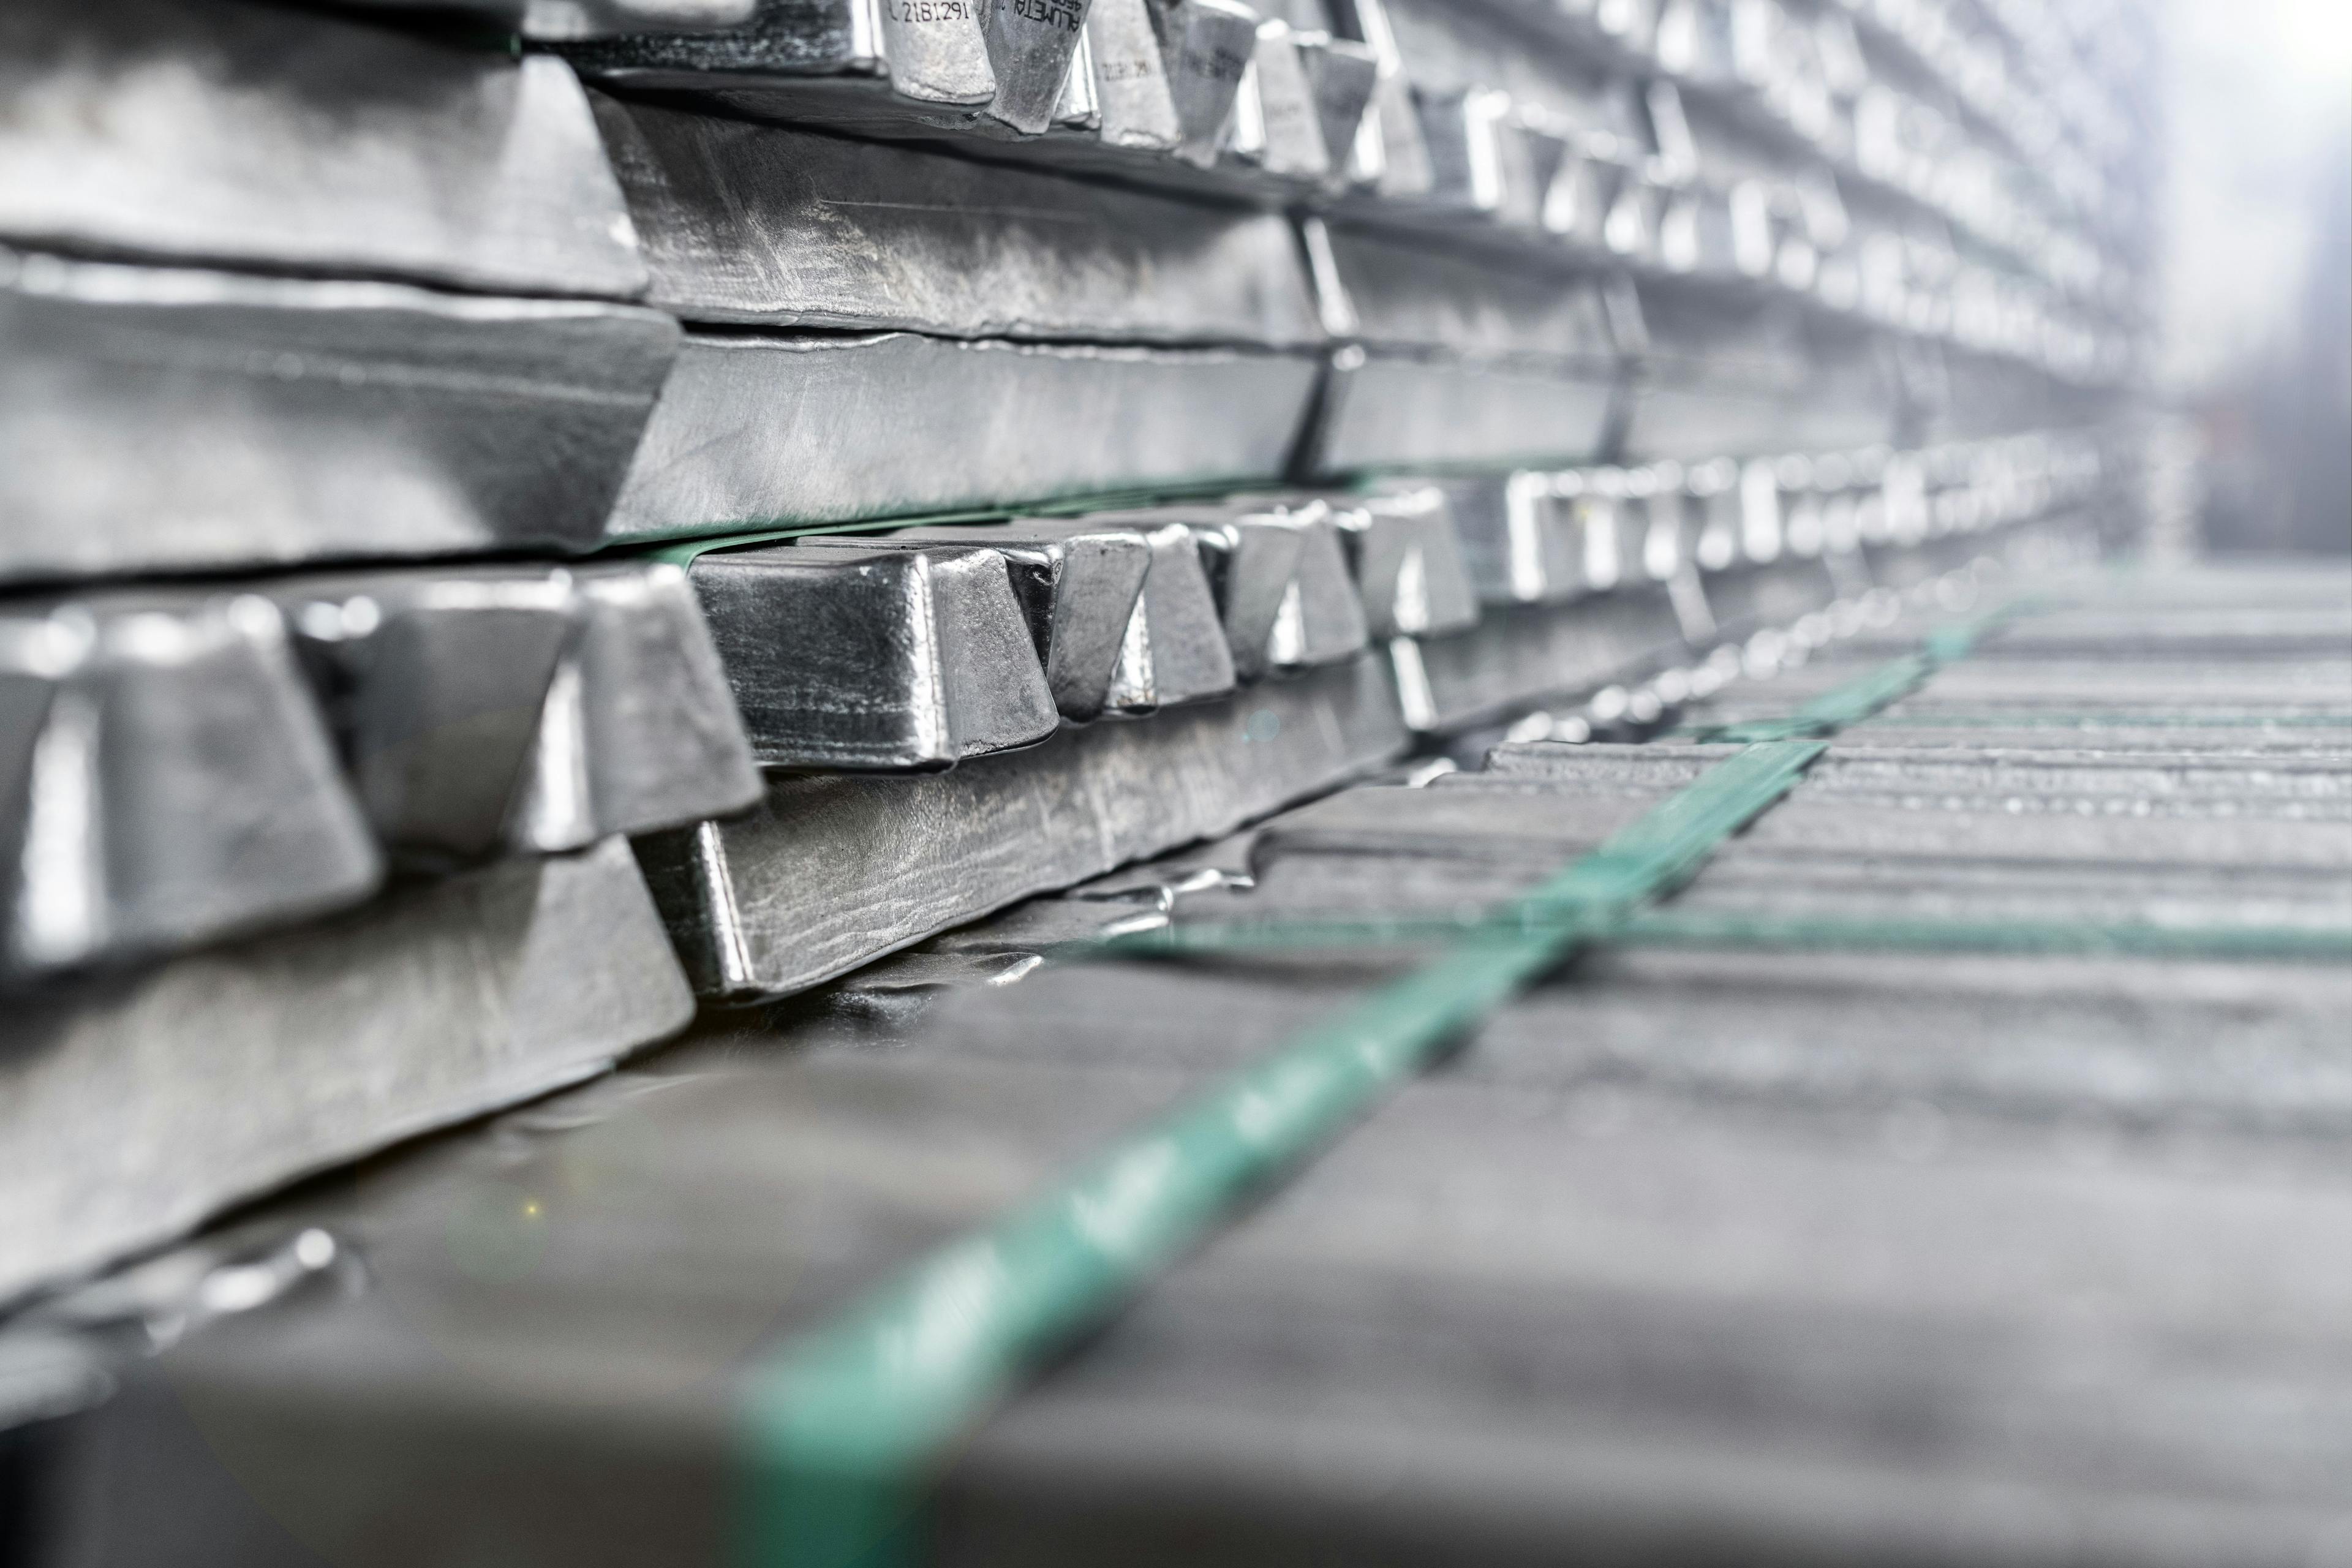 Aluminum ingots - aluminum - industrial production - material pile | Image Credit: © WATCH_MEDIA_HOUSE - stock.adobe.com